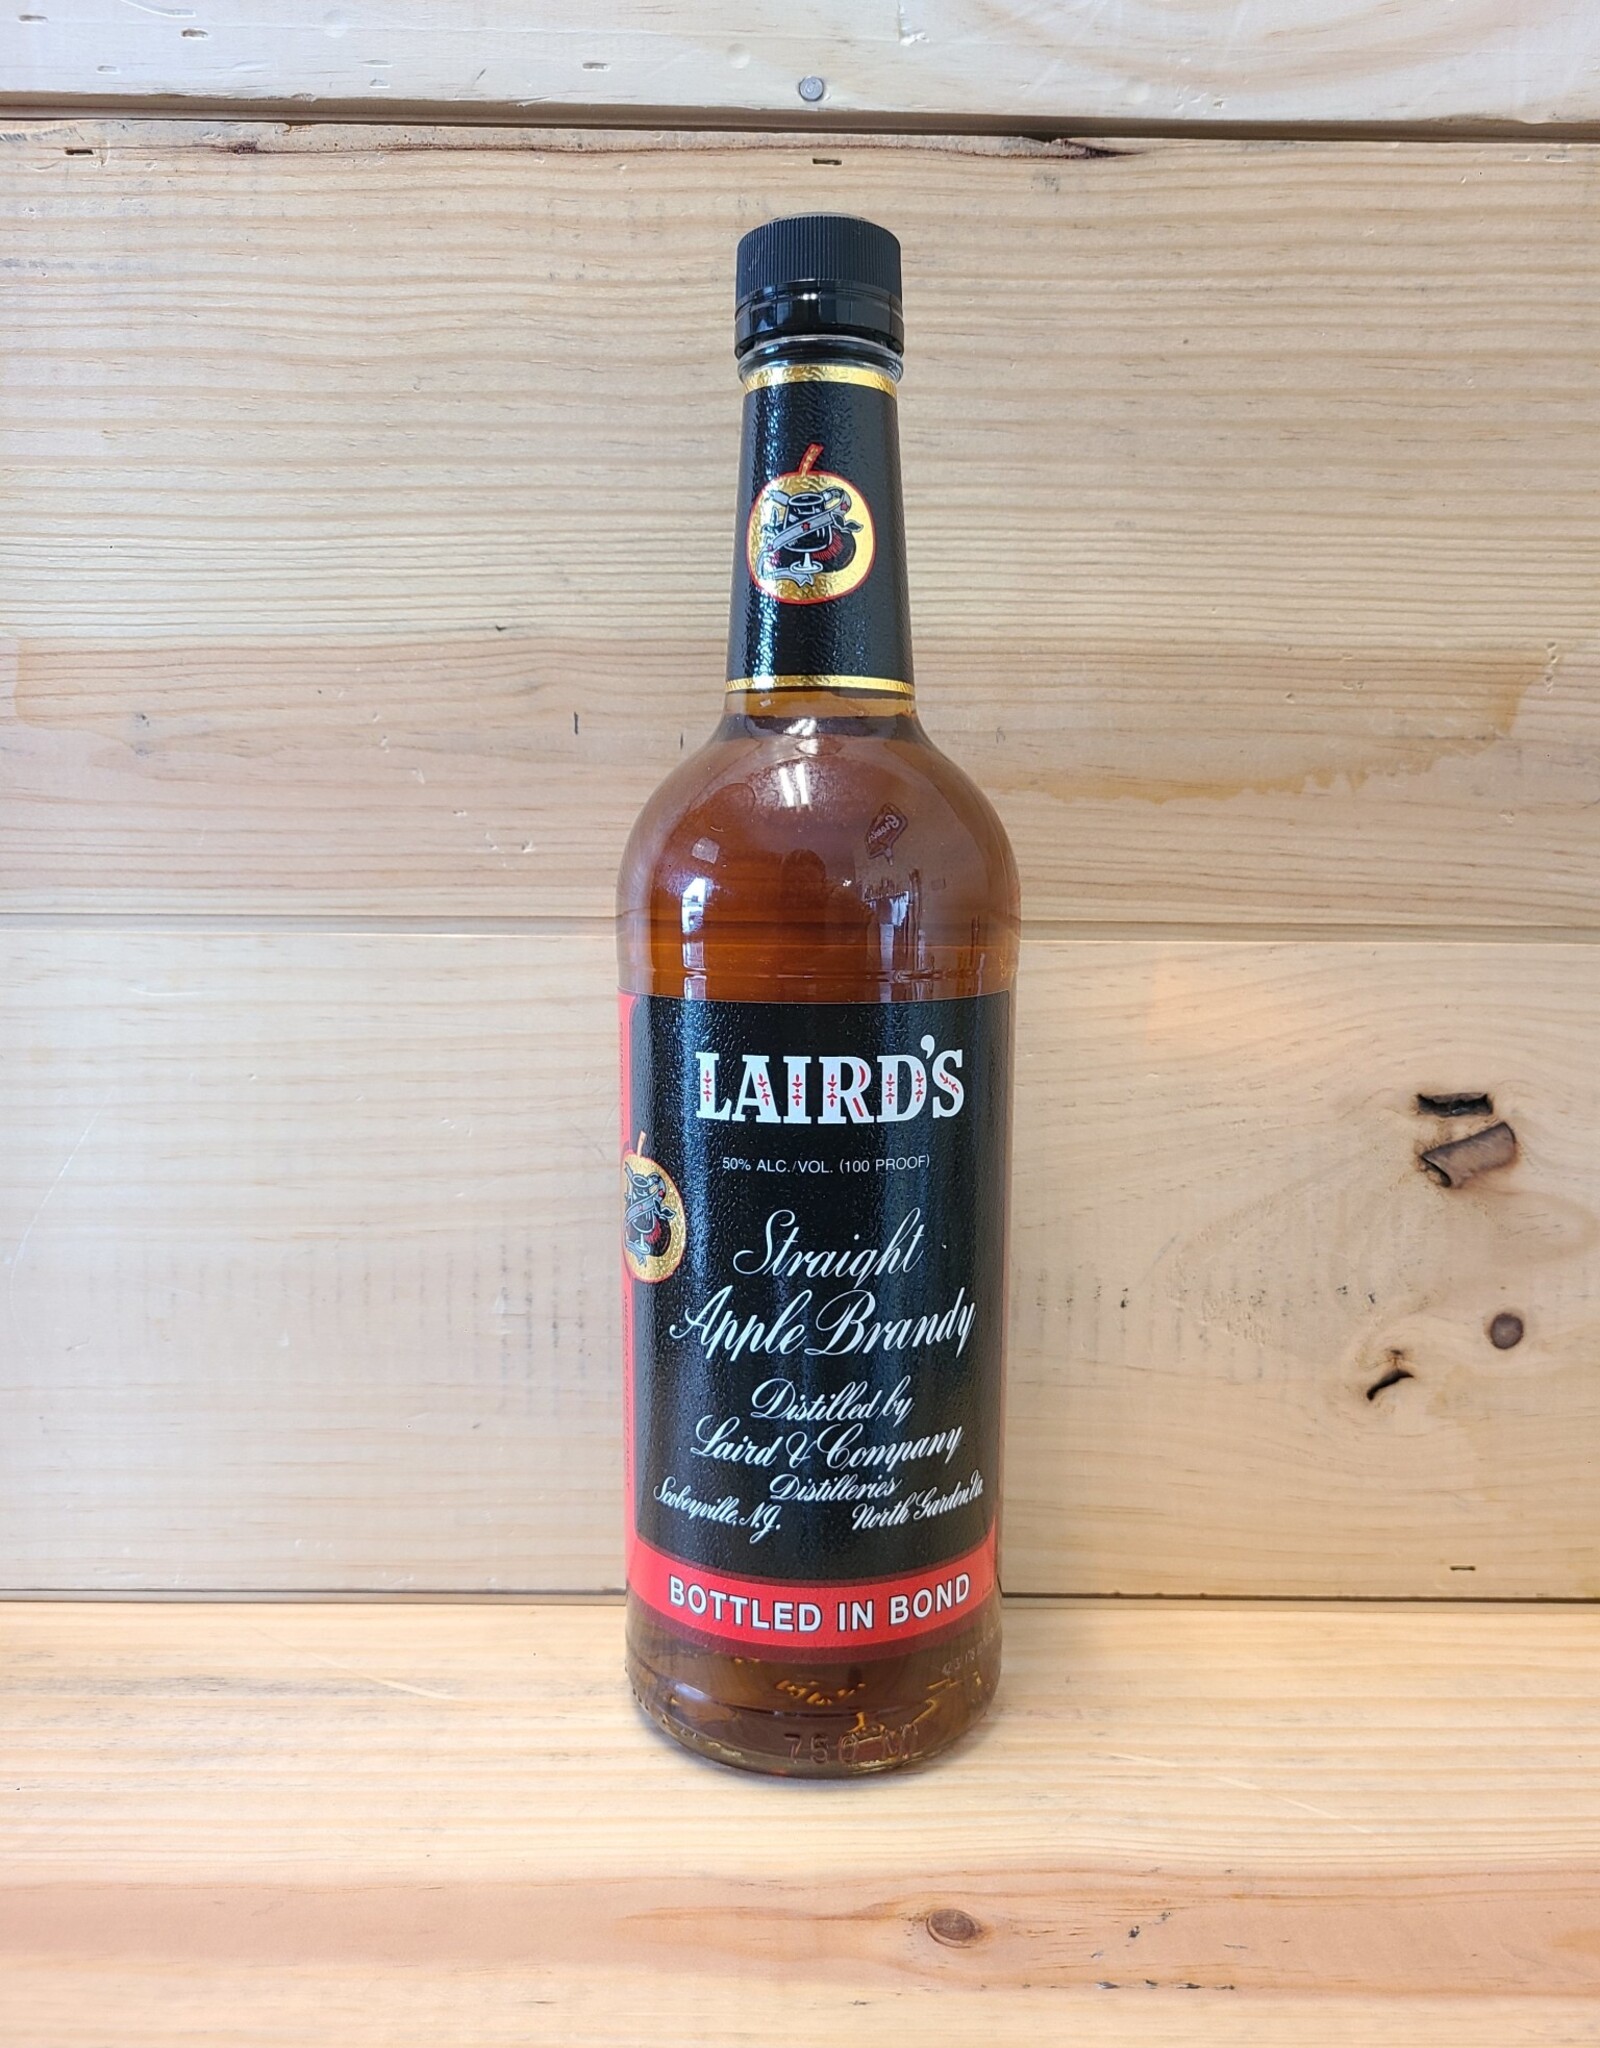 Laird's Straight Apple Brandy 100 Proof